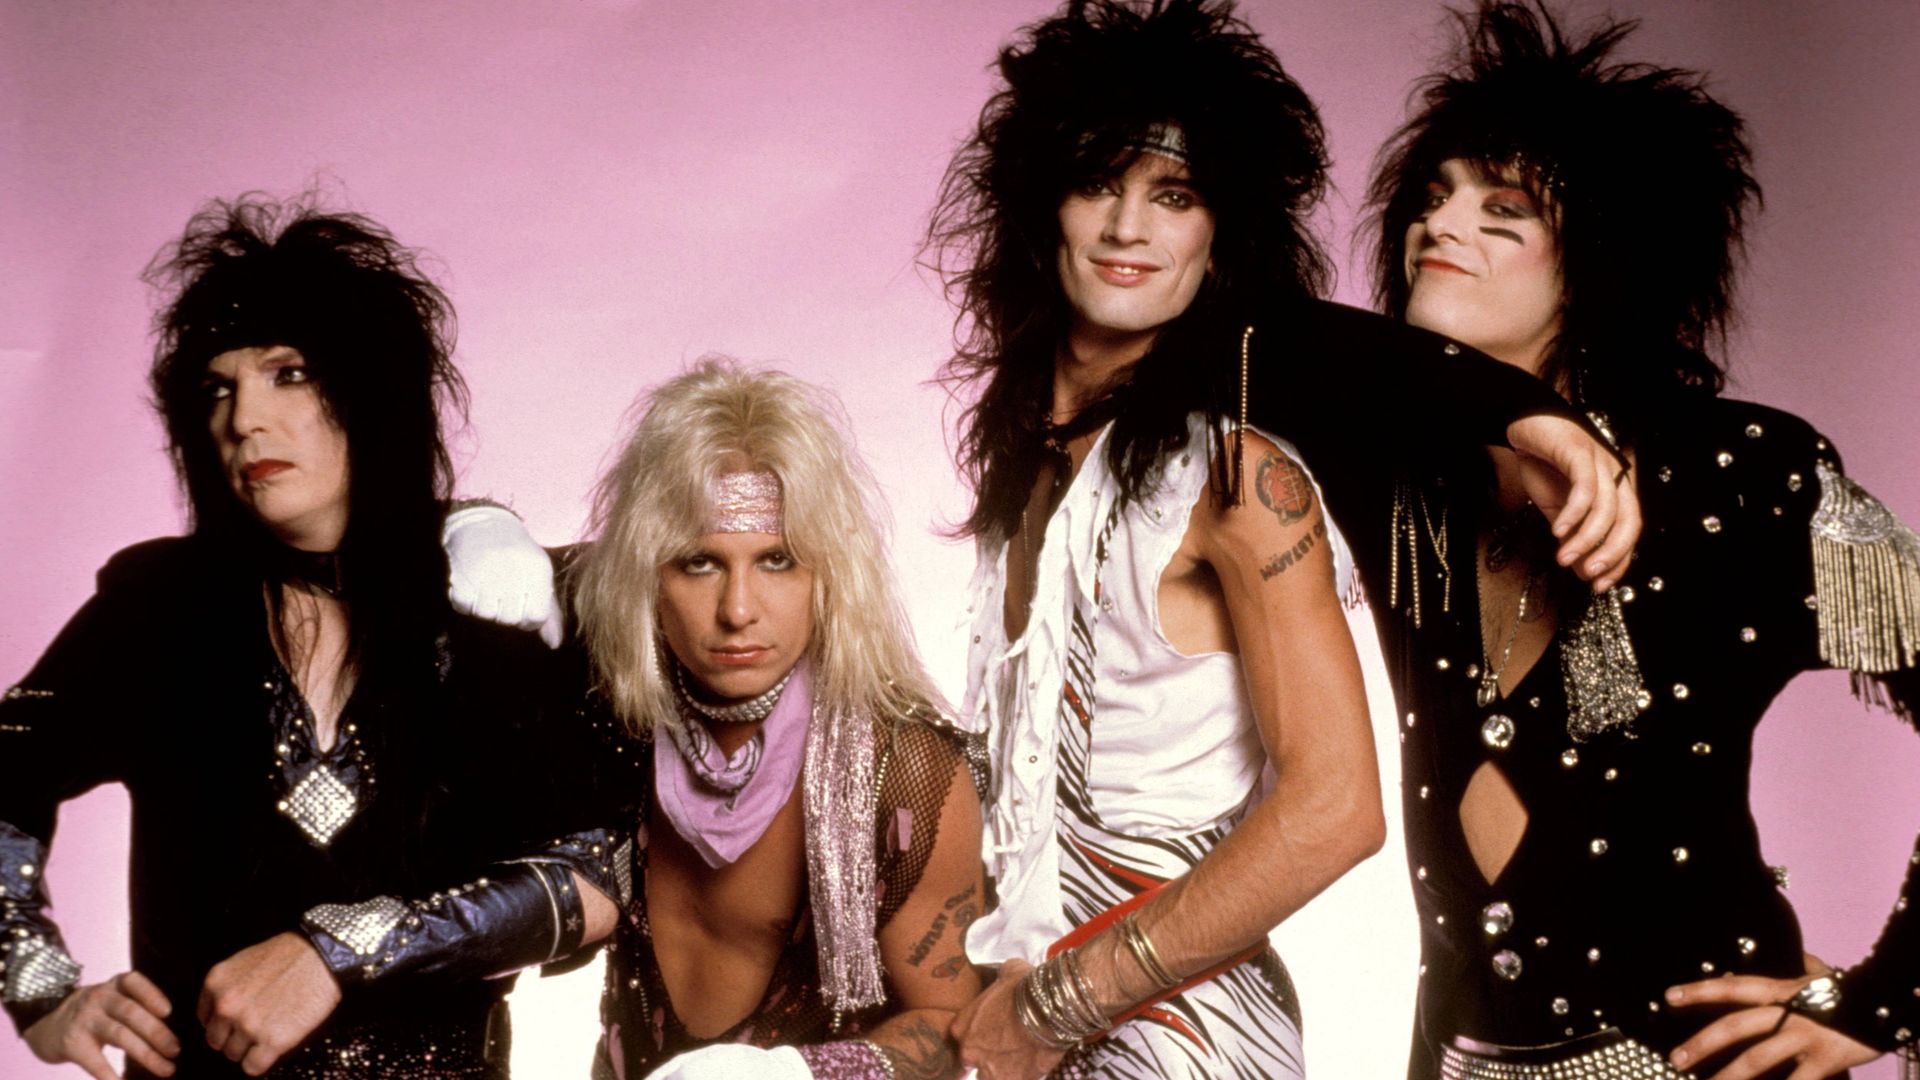 Mötley Crüe in the 80's